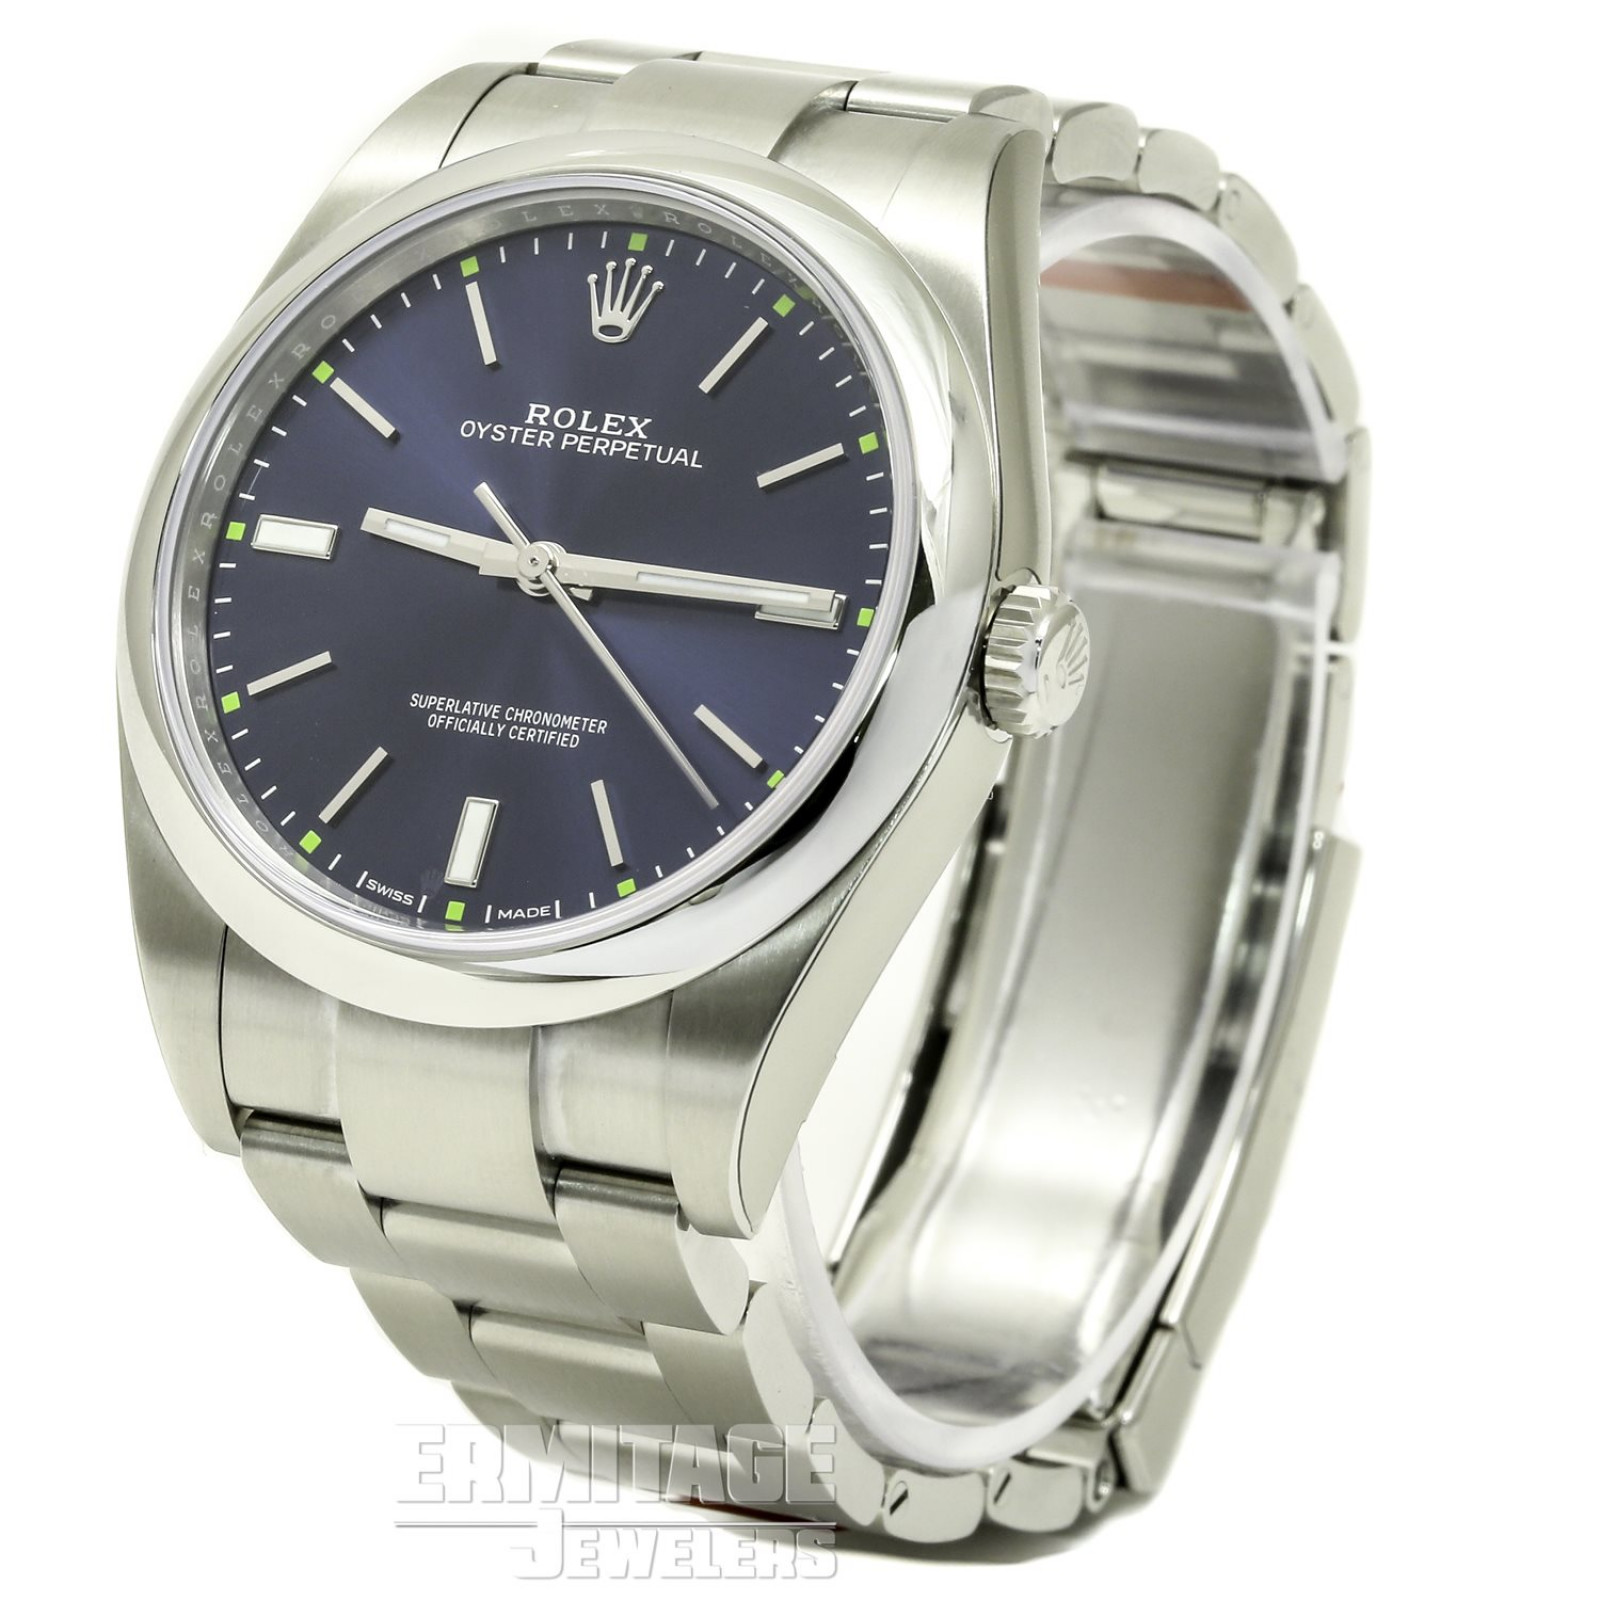 Unworn Rolex Oyster Perpetual 114300 Watch Full Set 2019